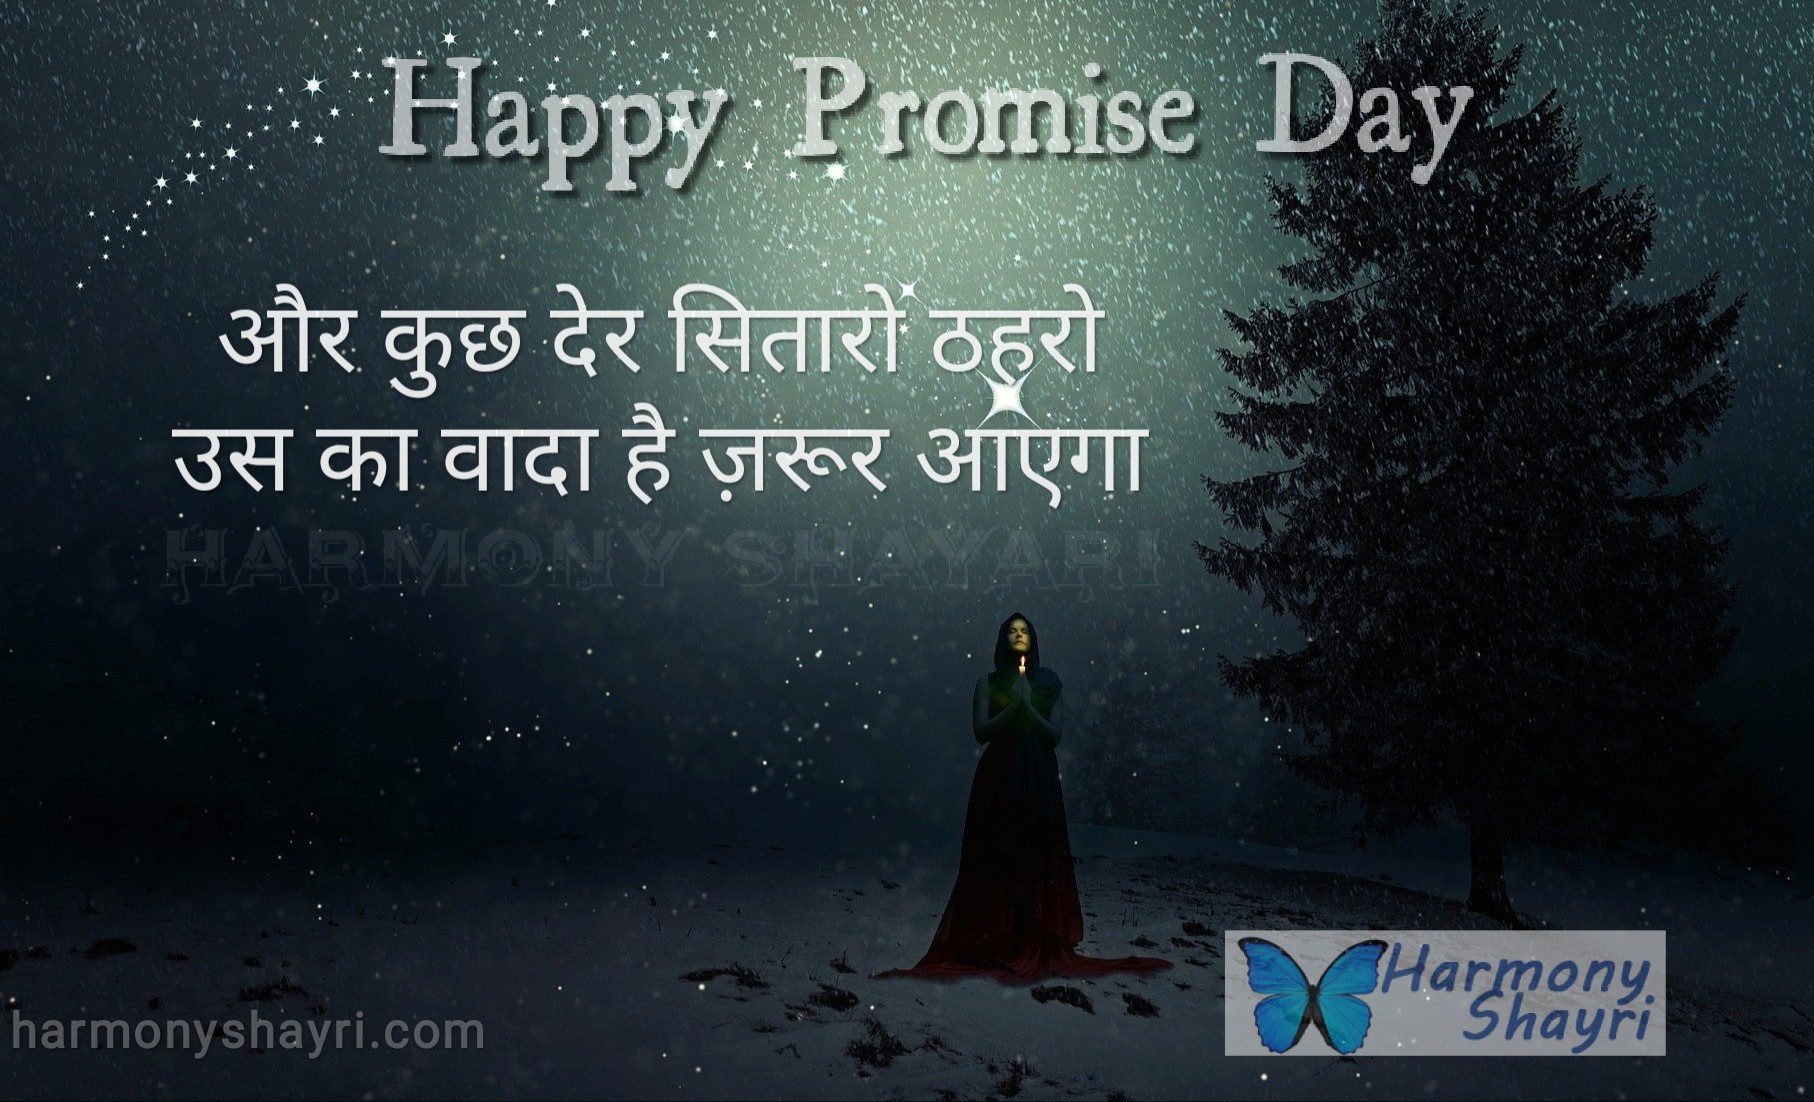 Aur kuchh der sitaron thahro – Happy Promise Day